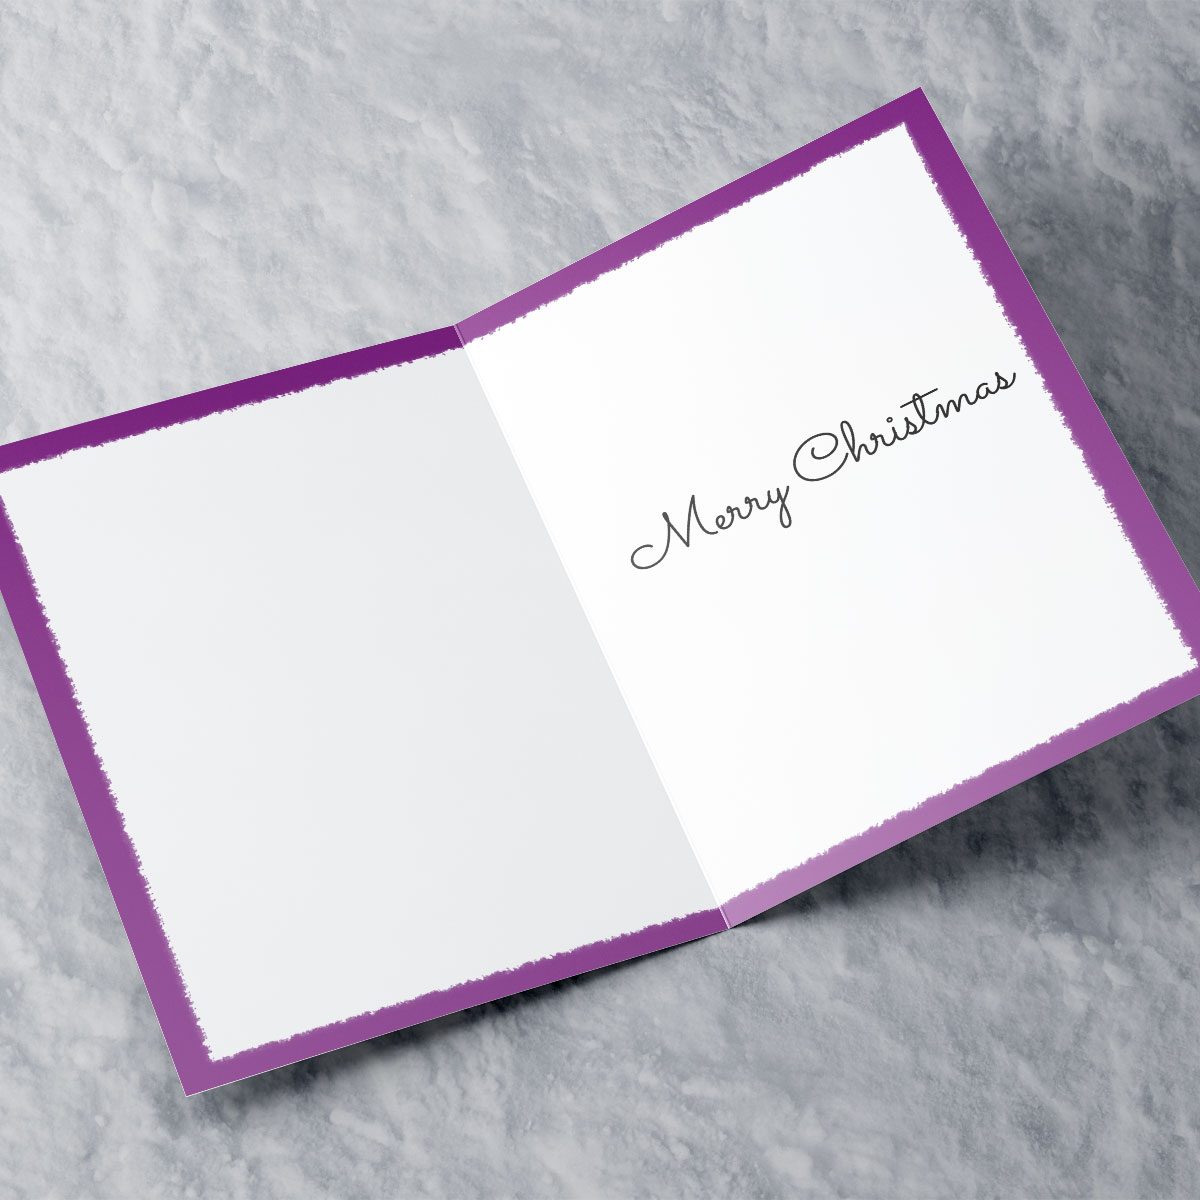 Personalised Christmas Card - Meowy Christmas Granddaughter